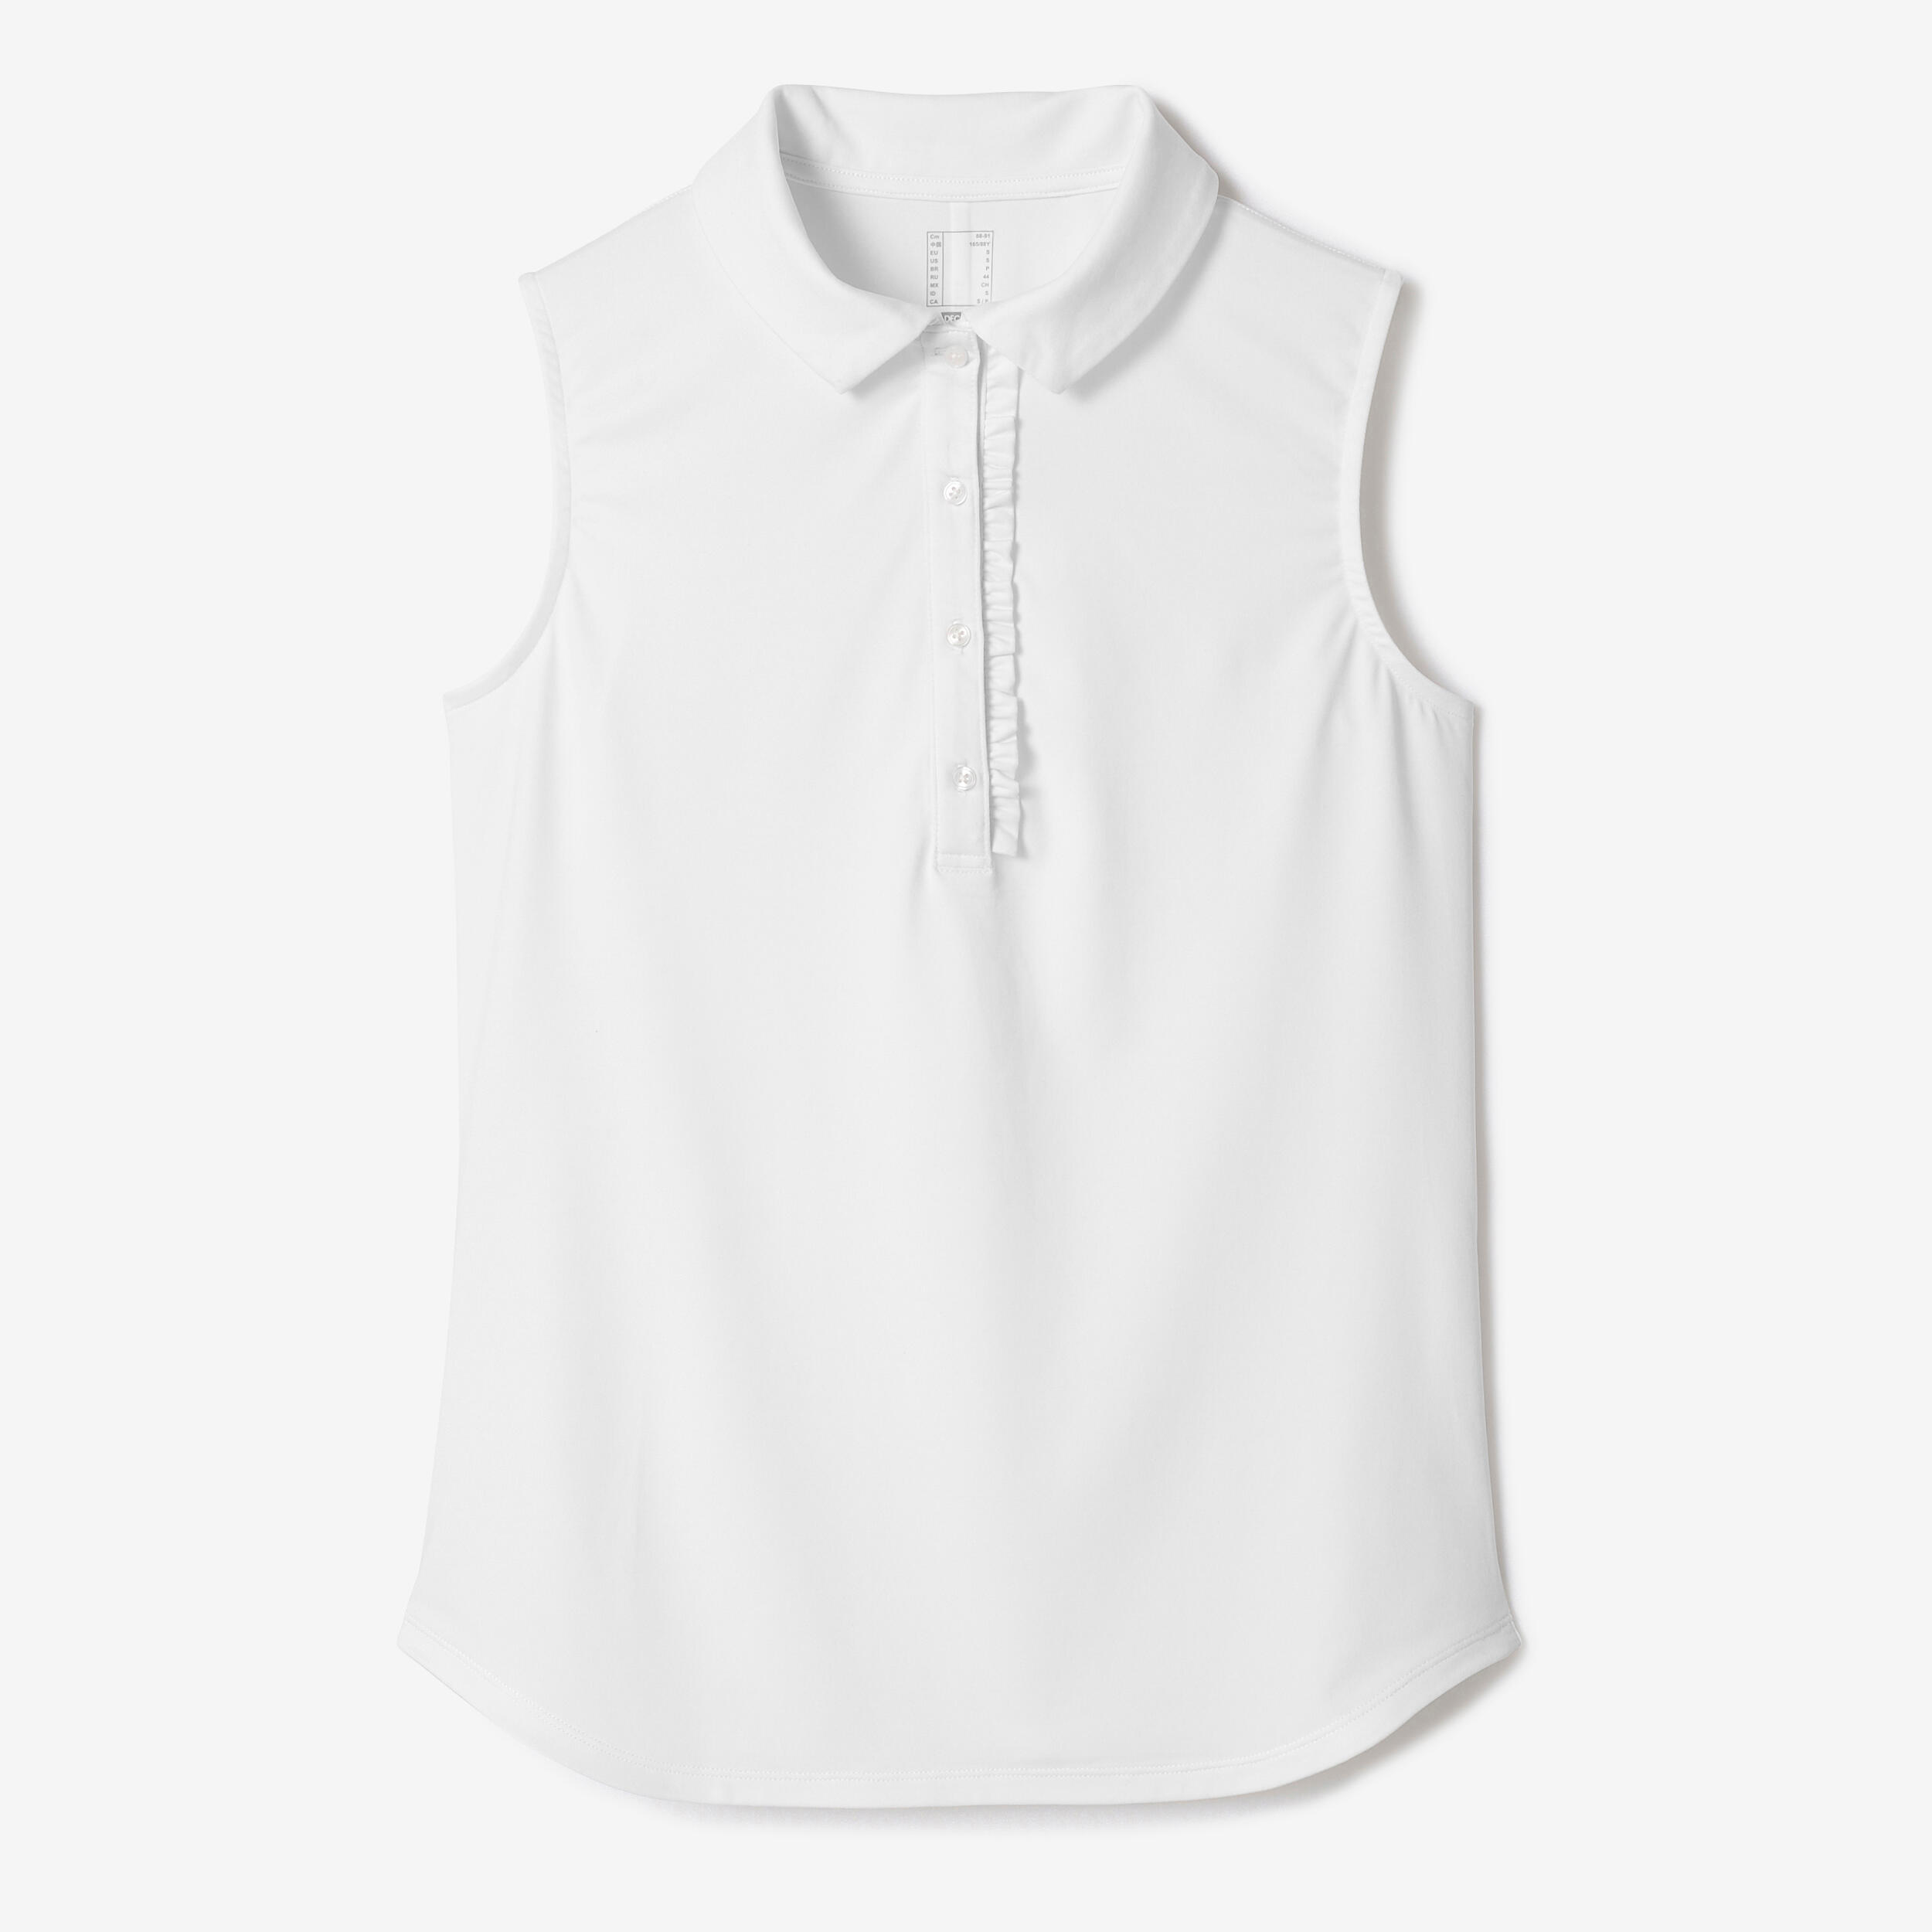 Refurbished Womens sleeveless golf polo shirt - B Grade 1/7